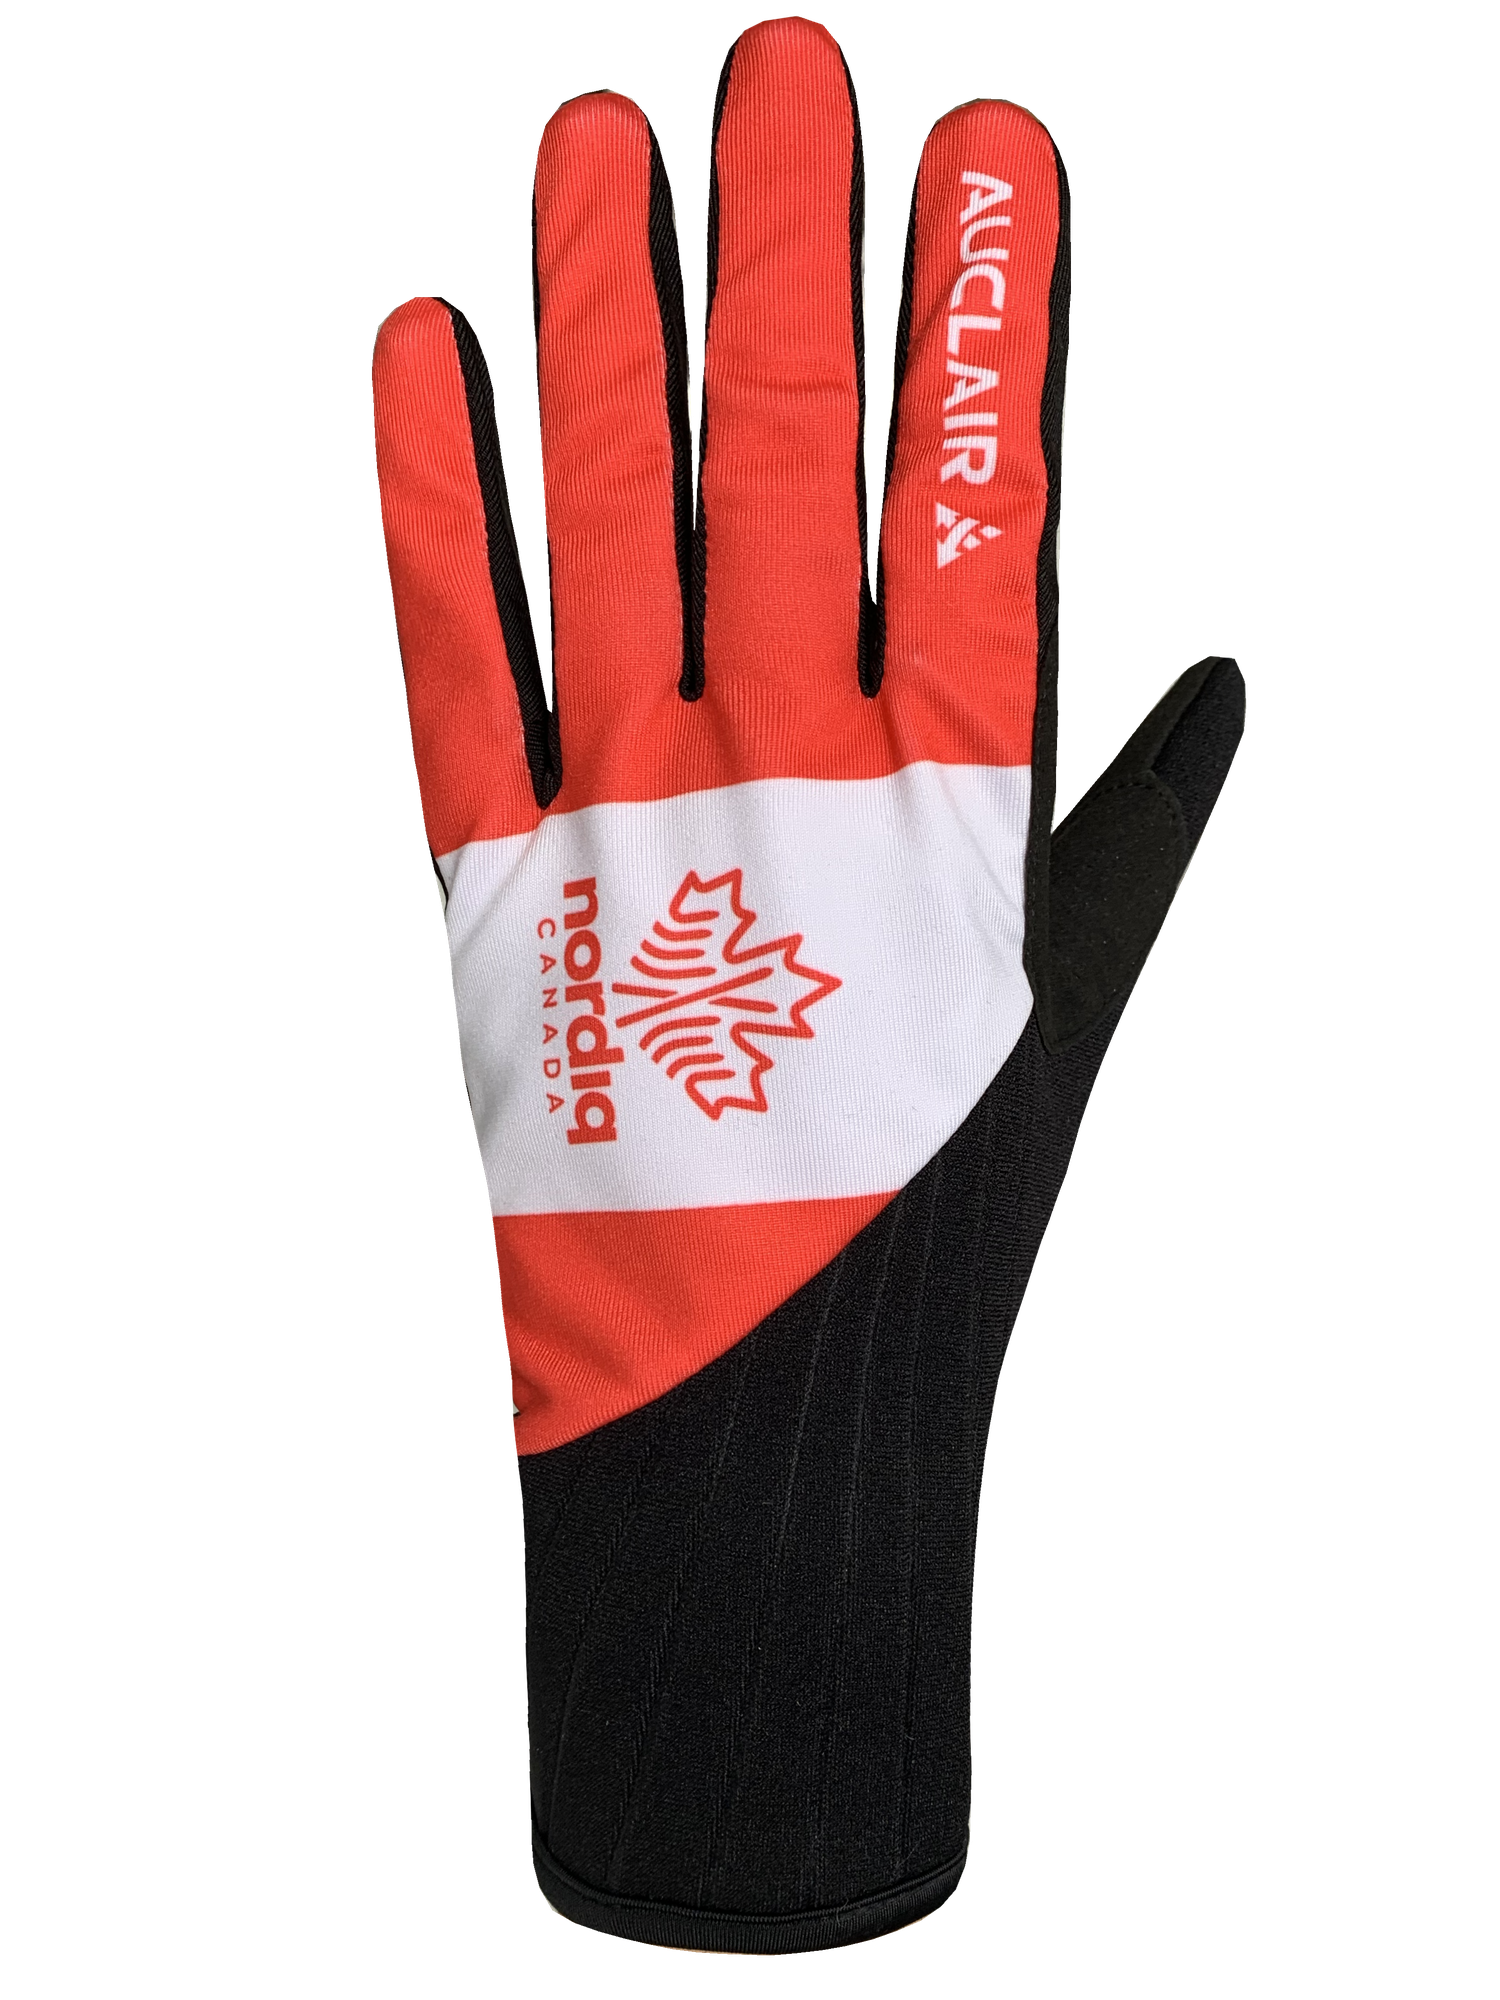 Maple Leaf Neo Gloves - Women, Black/Red/White